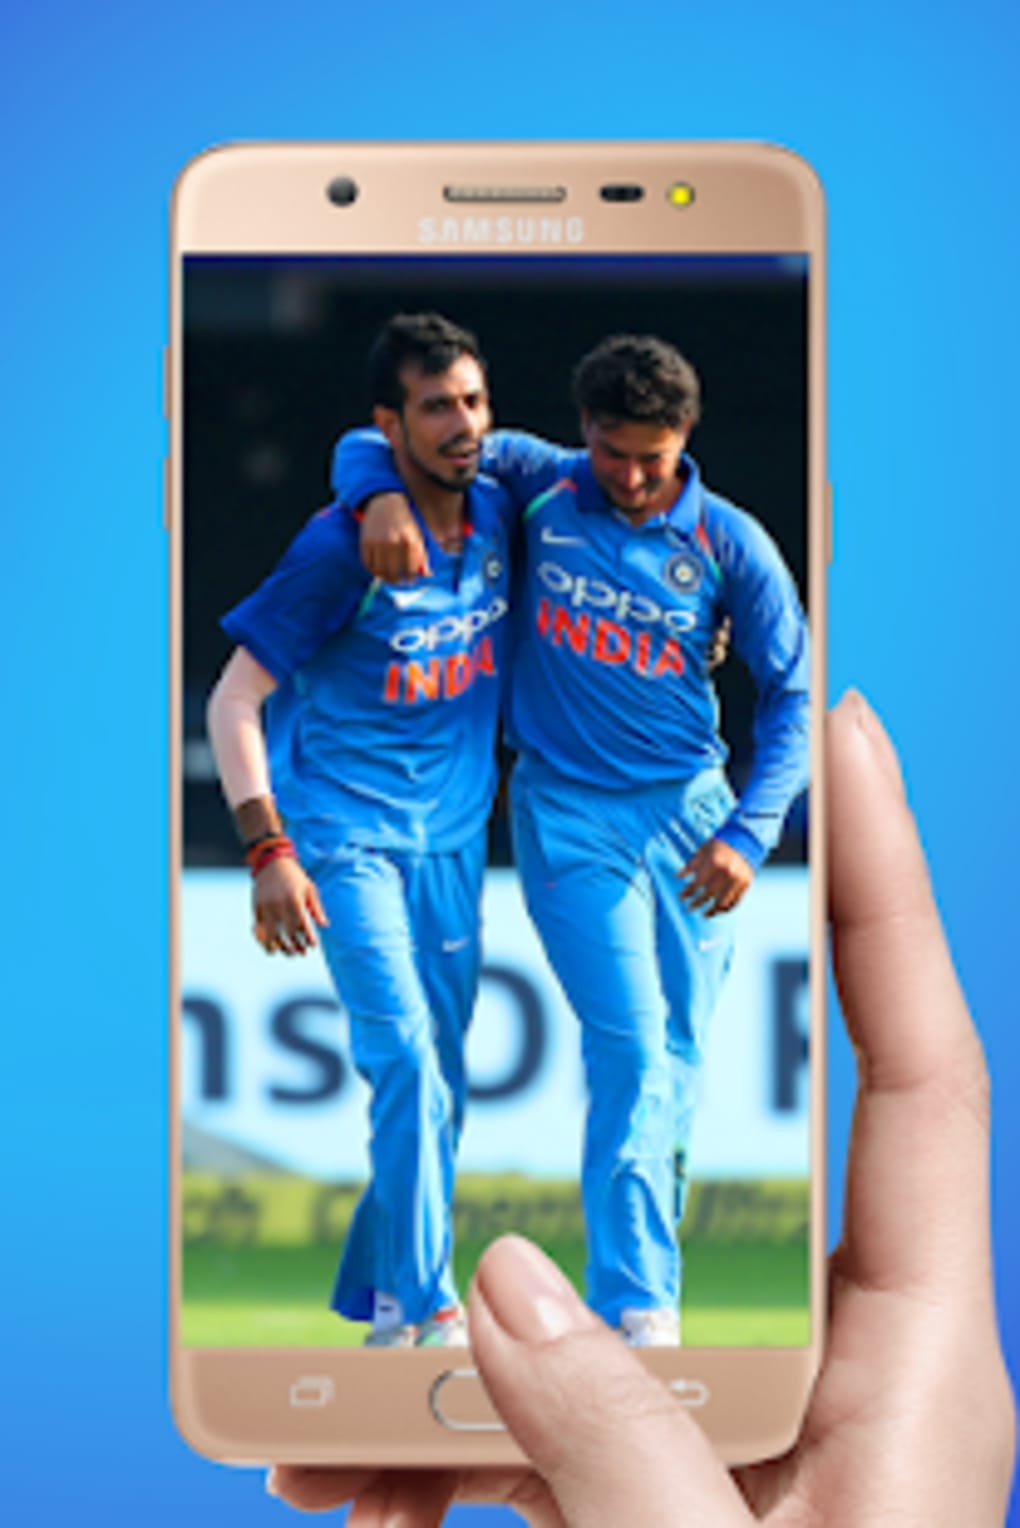 live cricket mobile tv free